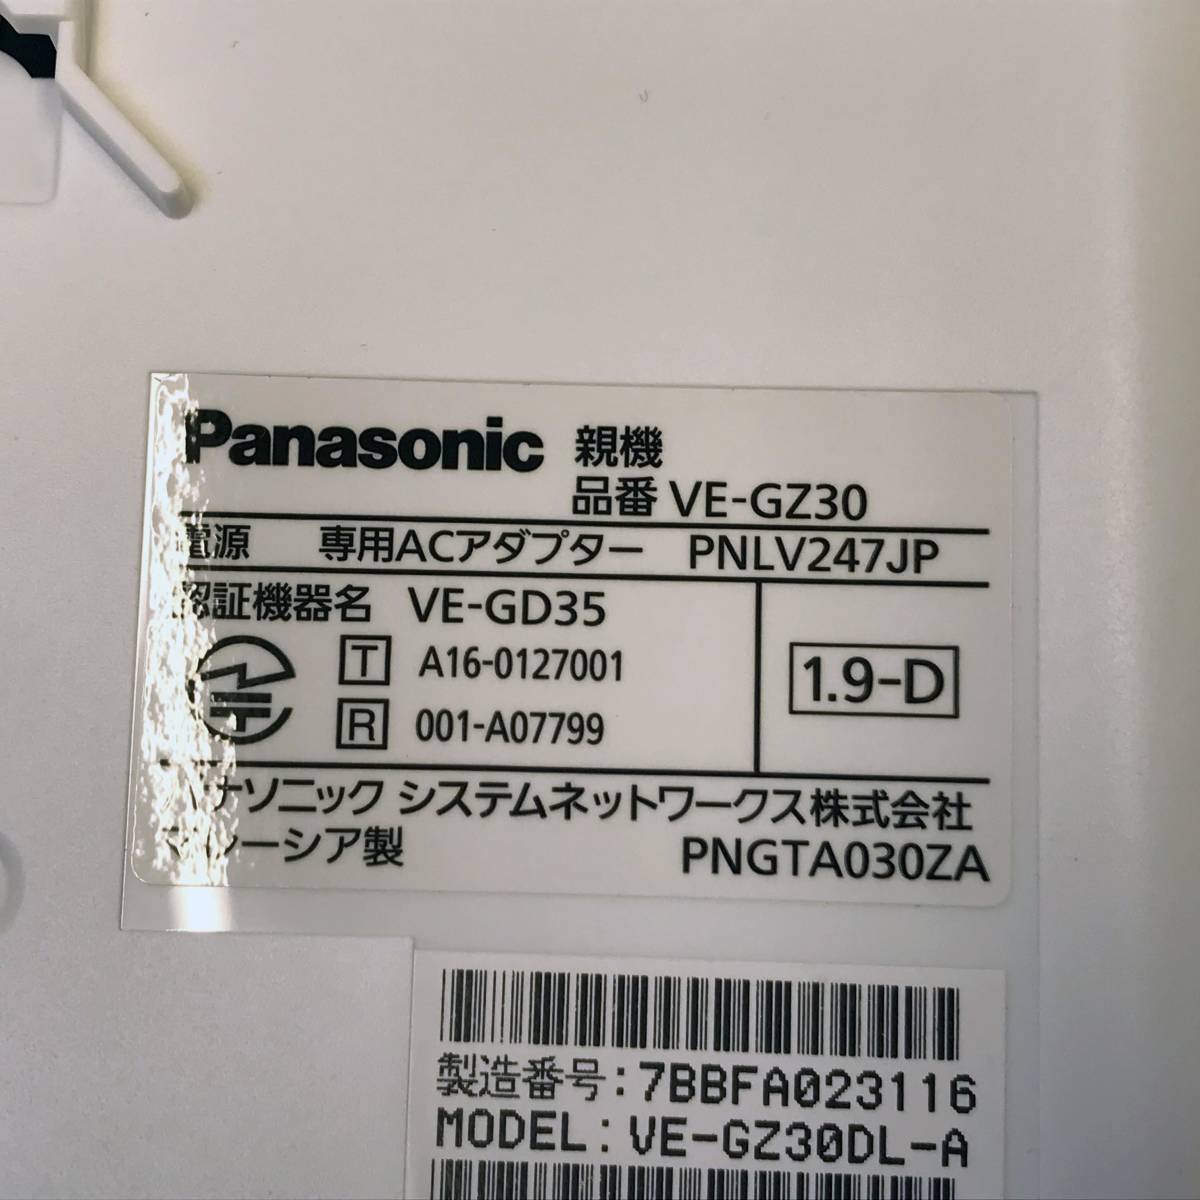 [ free shipping ]Panasonic Panasonic telephone machine RU*RU*RU VE-GZ30 navy blue cordless handset 1 pcs owner manual original box equipped I1110-2